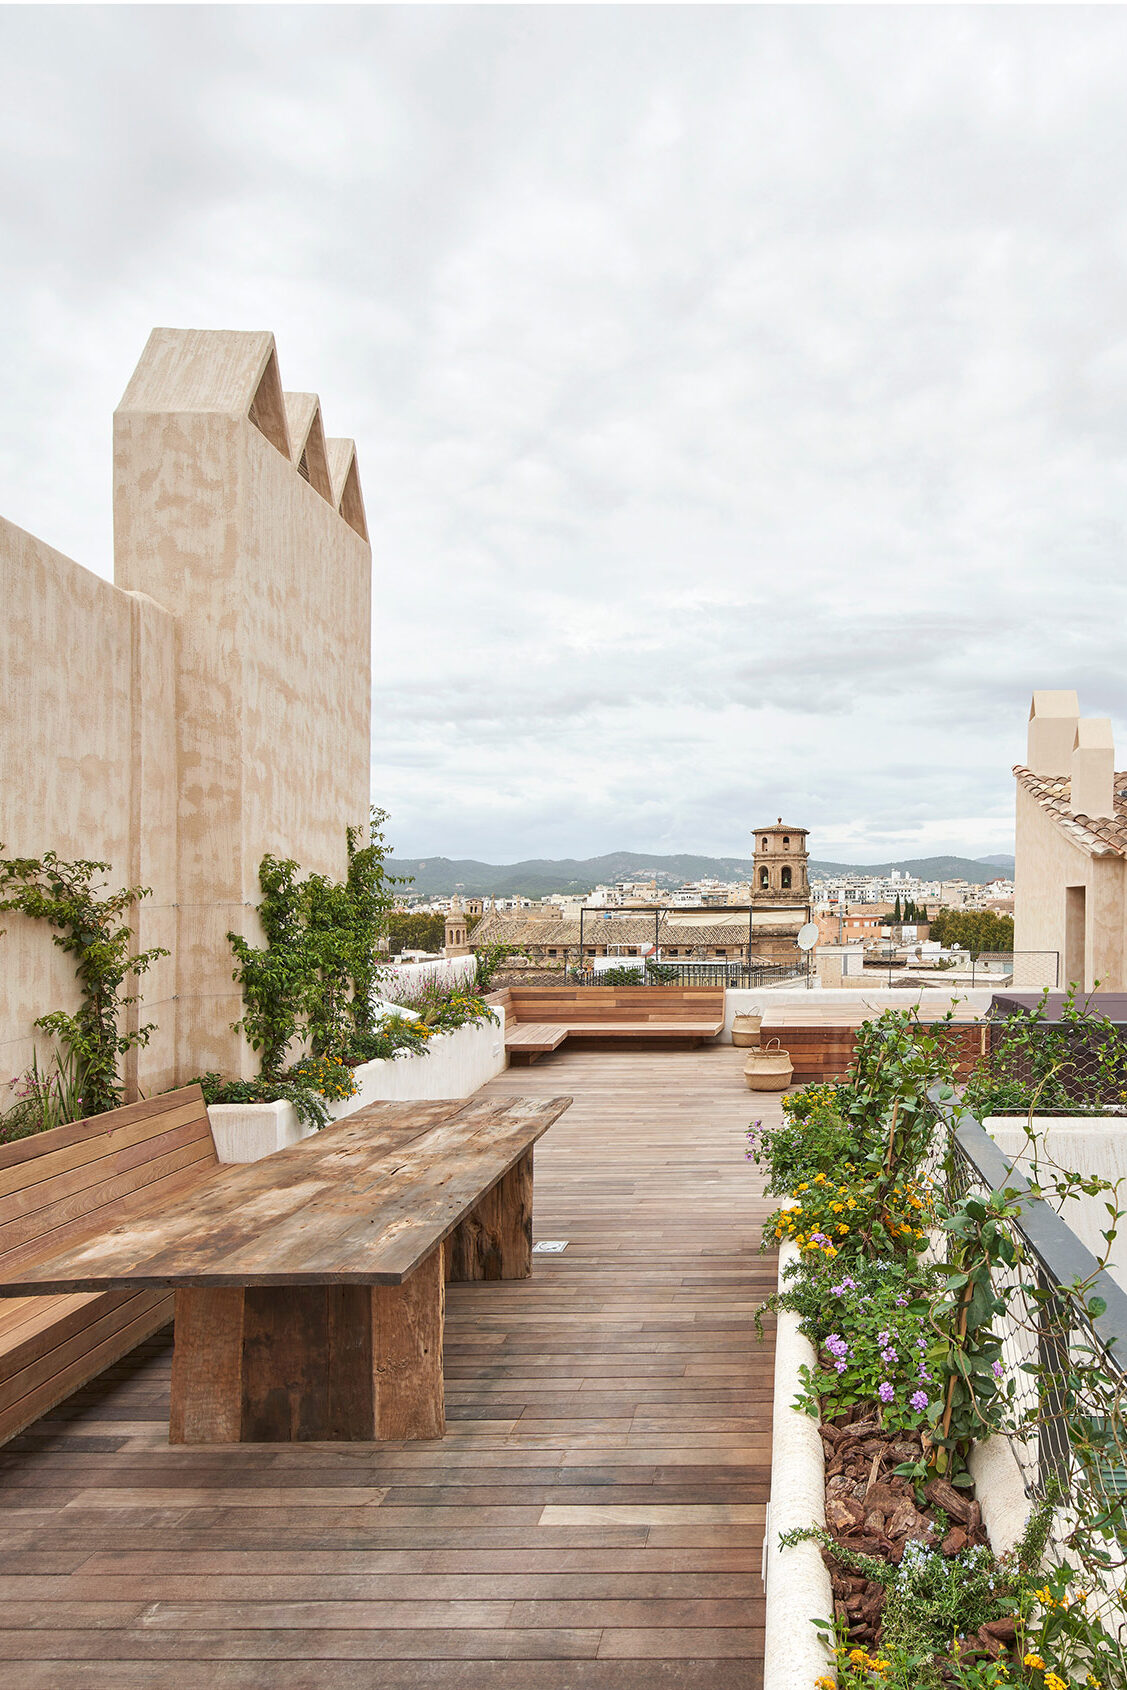 OHLAB renovation Can Santacilia Palma de Mallorca ArchEyes roof